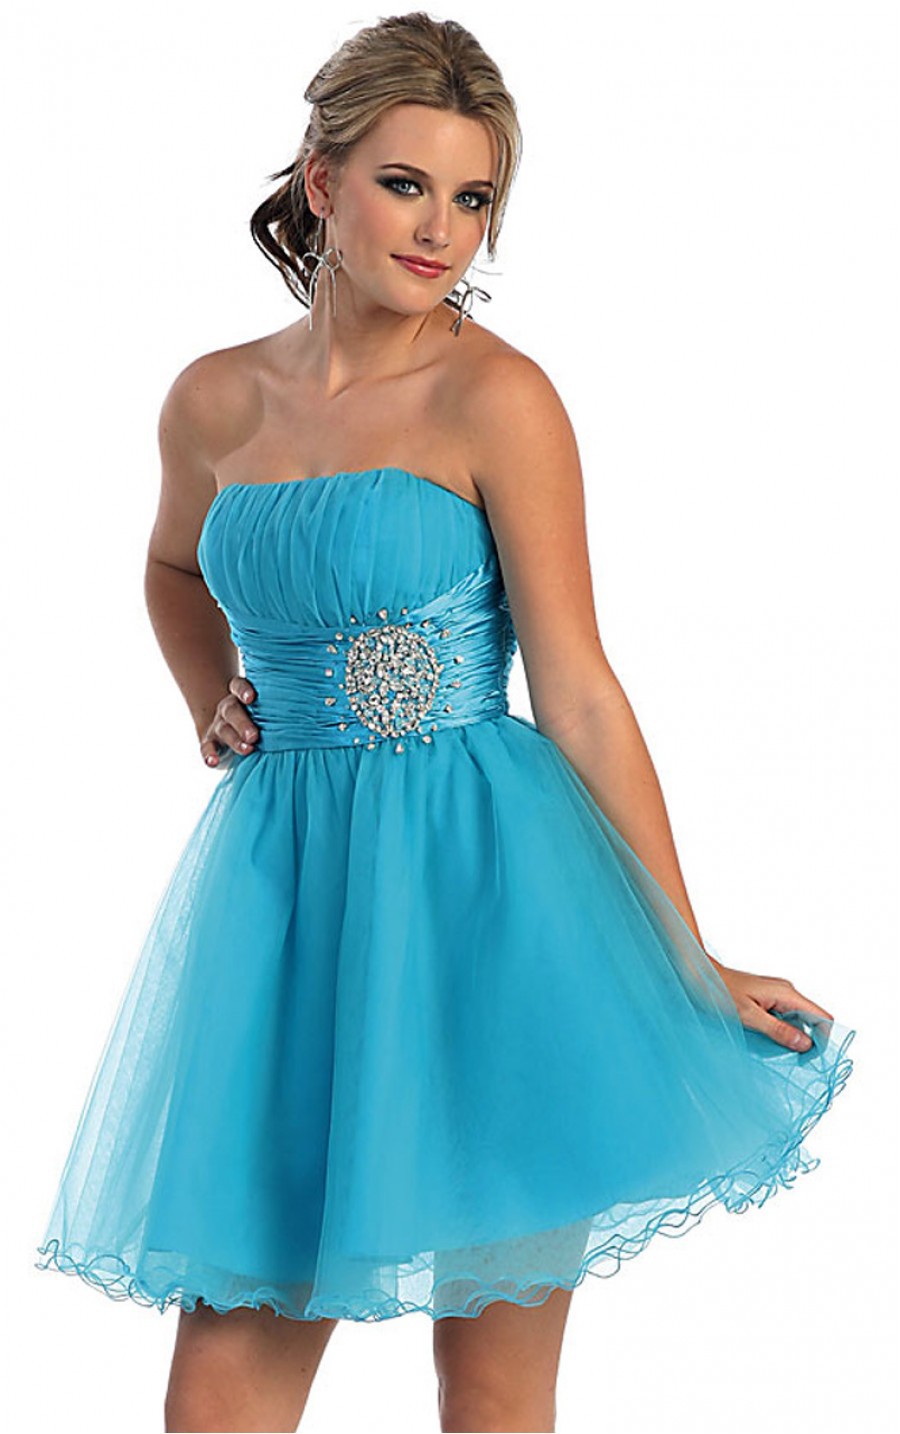 Malibu Blue Short Party Dress Bridesmaid Dress PromDress with beading ...